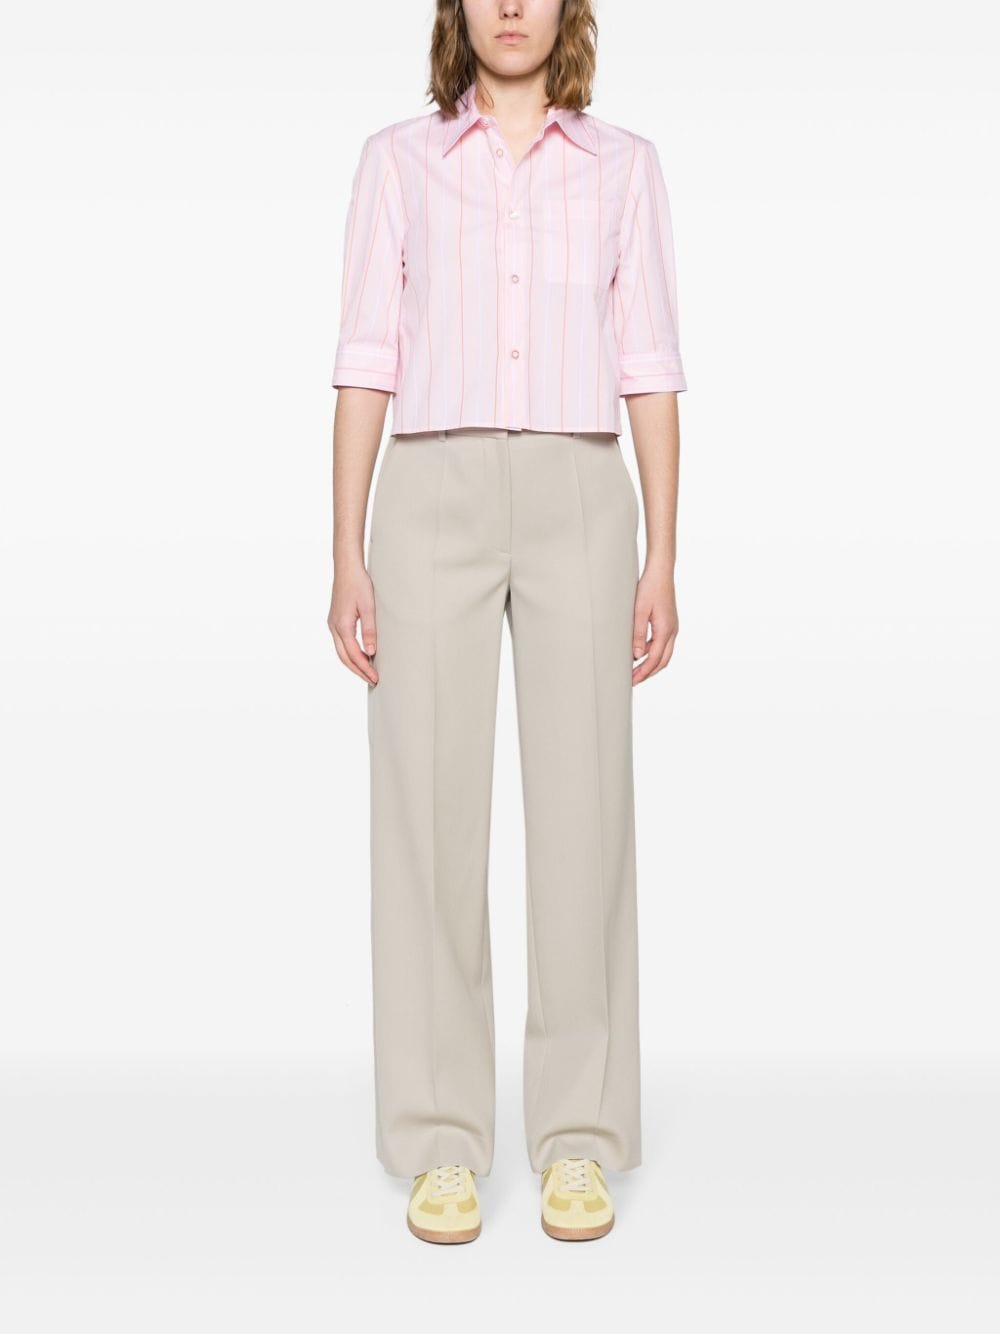 MARNI Pink Striped Short Sleeve Shirt for Women